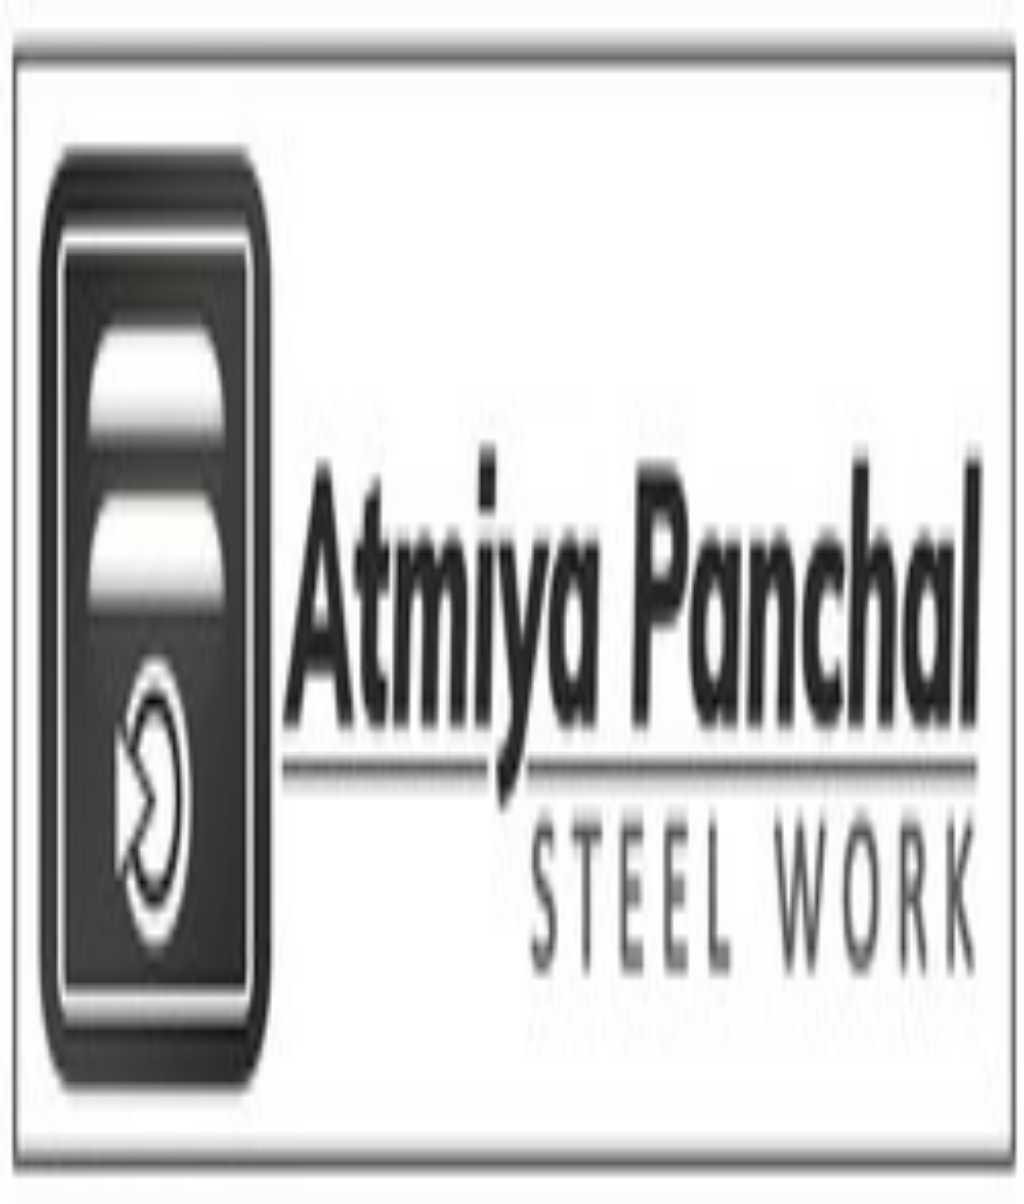 ATMIYA PANCHAL STEEL WORK